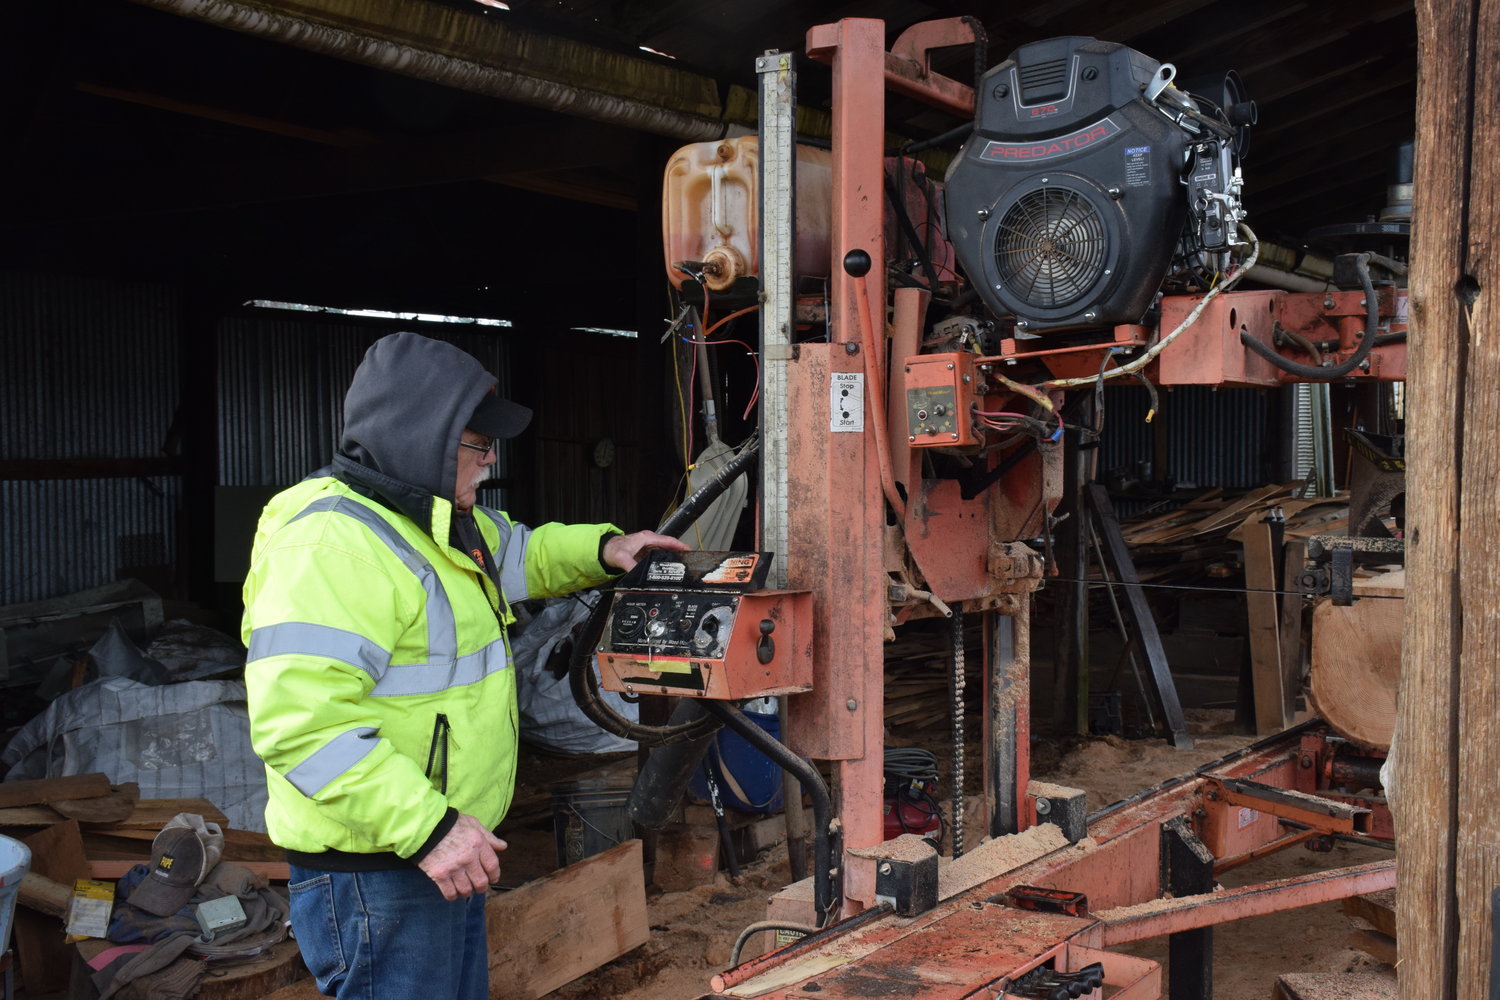 Dollar’s Corner Sawmill operator Pat Lydon looks at a “Saw-Mizer” sawmill at the location on Feb. 4.